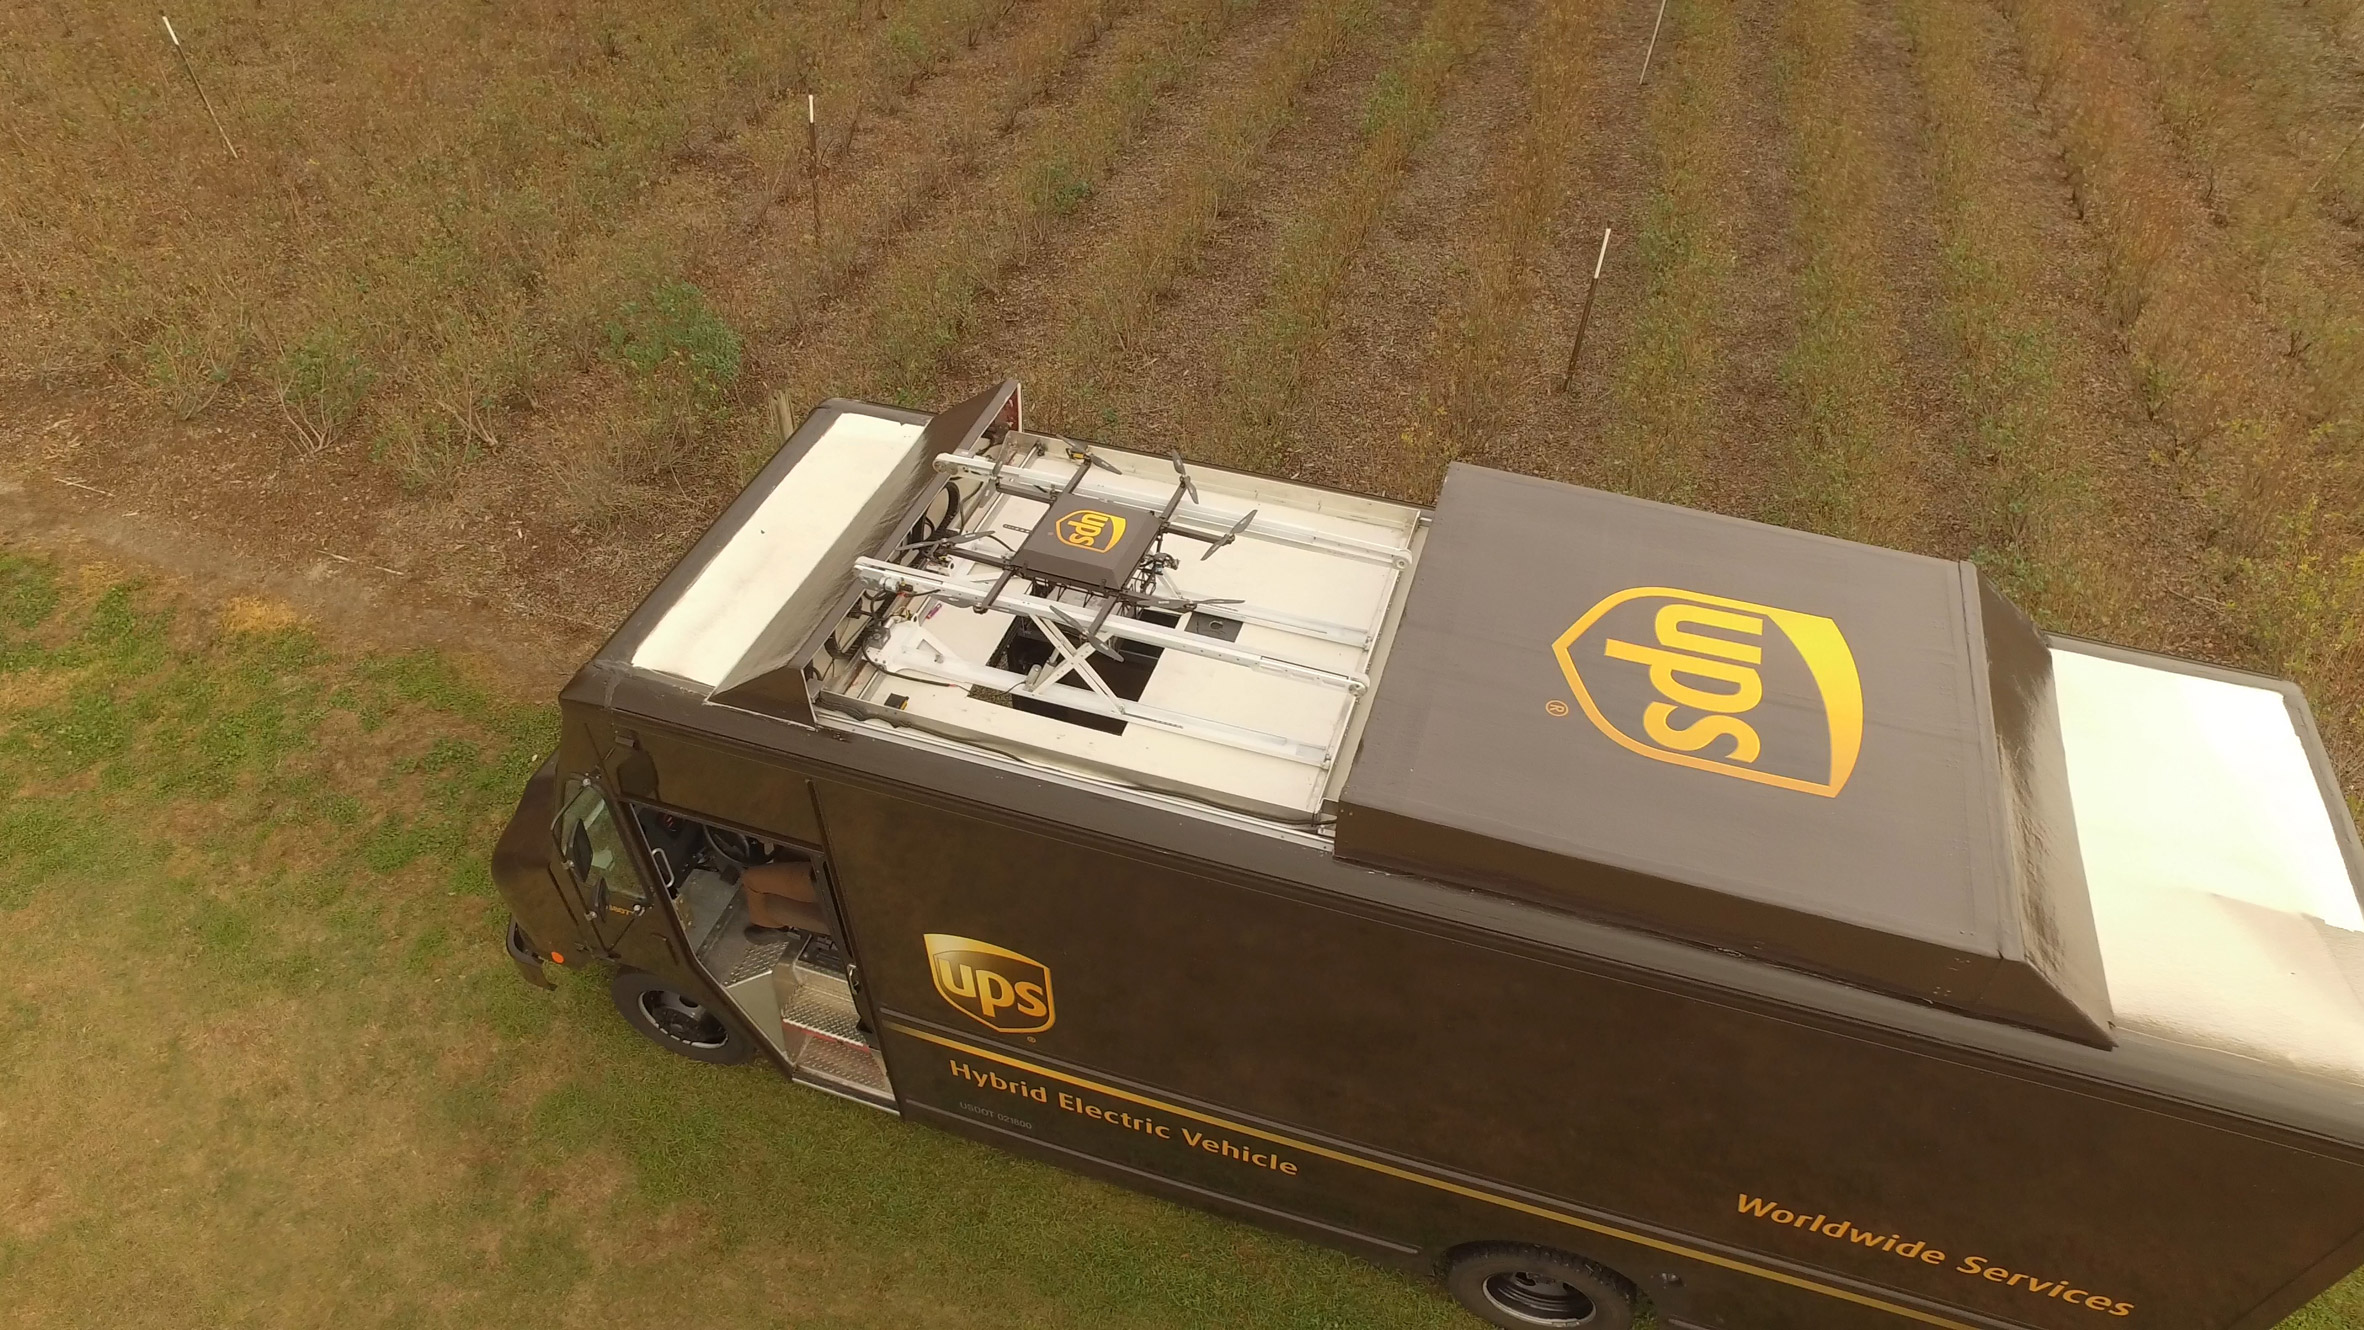 News: UPS drone